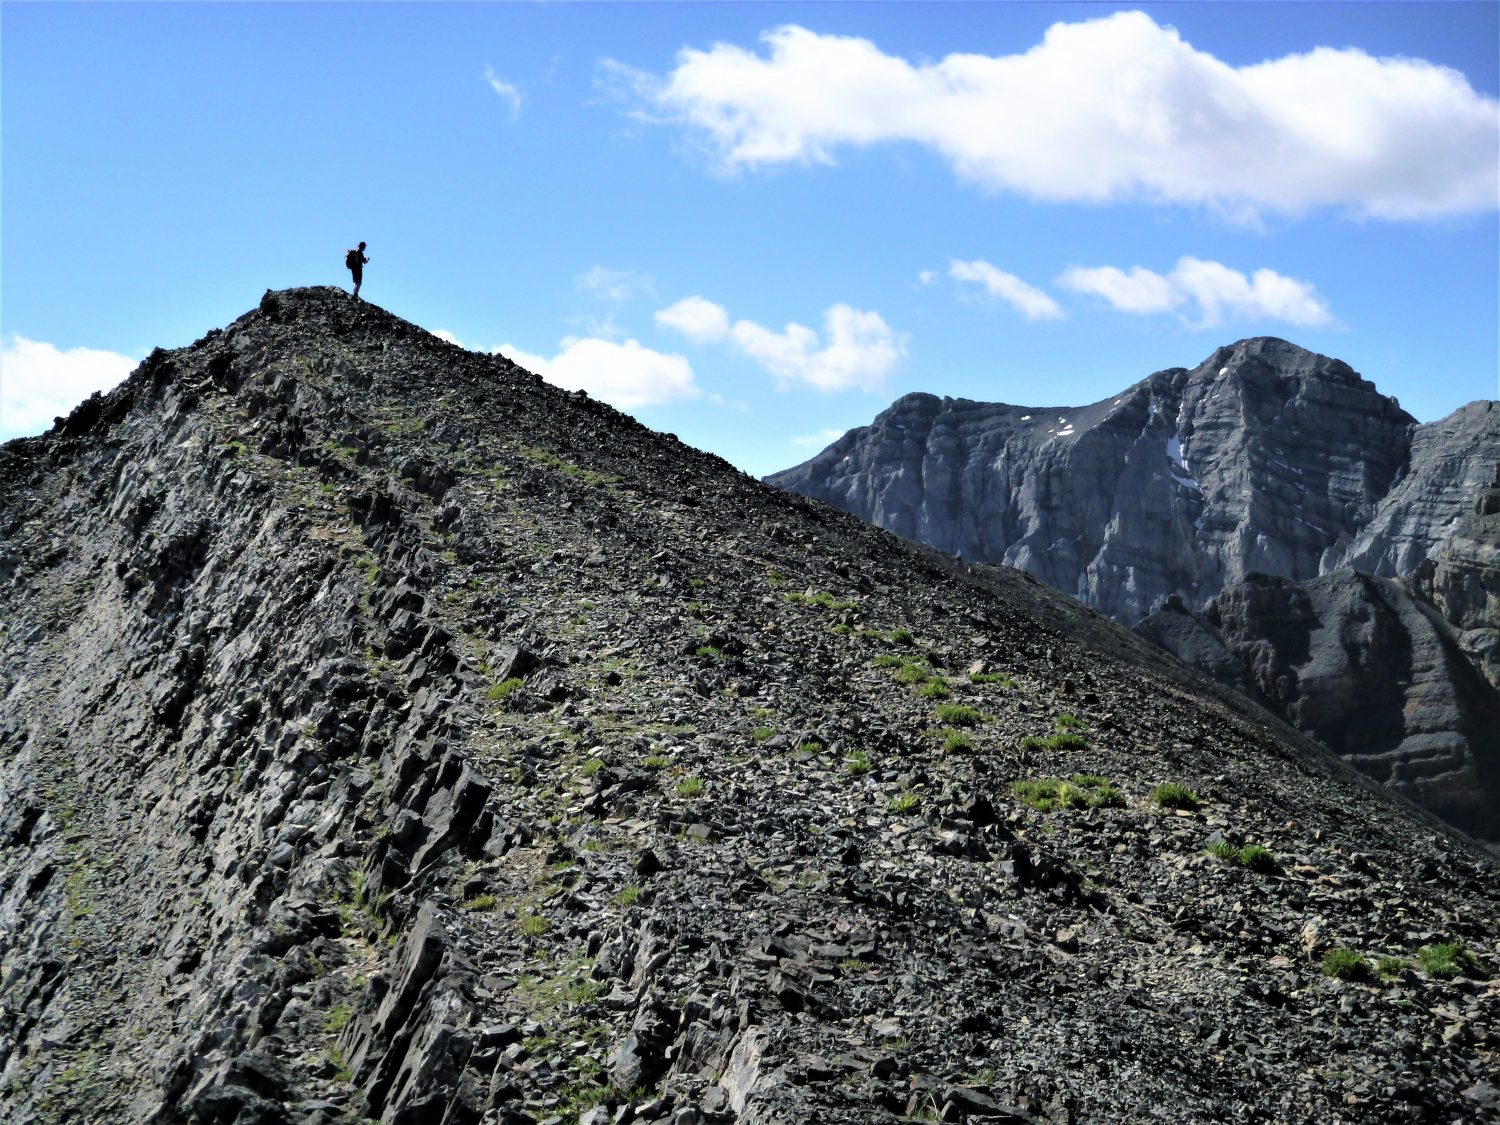 Alex on top of Peak 11,090 with Breitenbach in background.